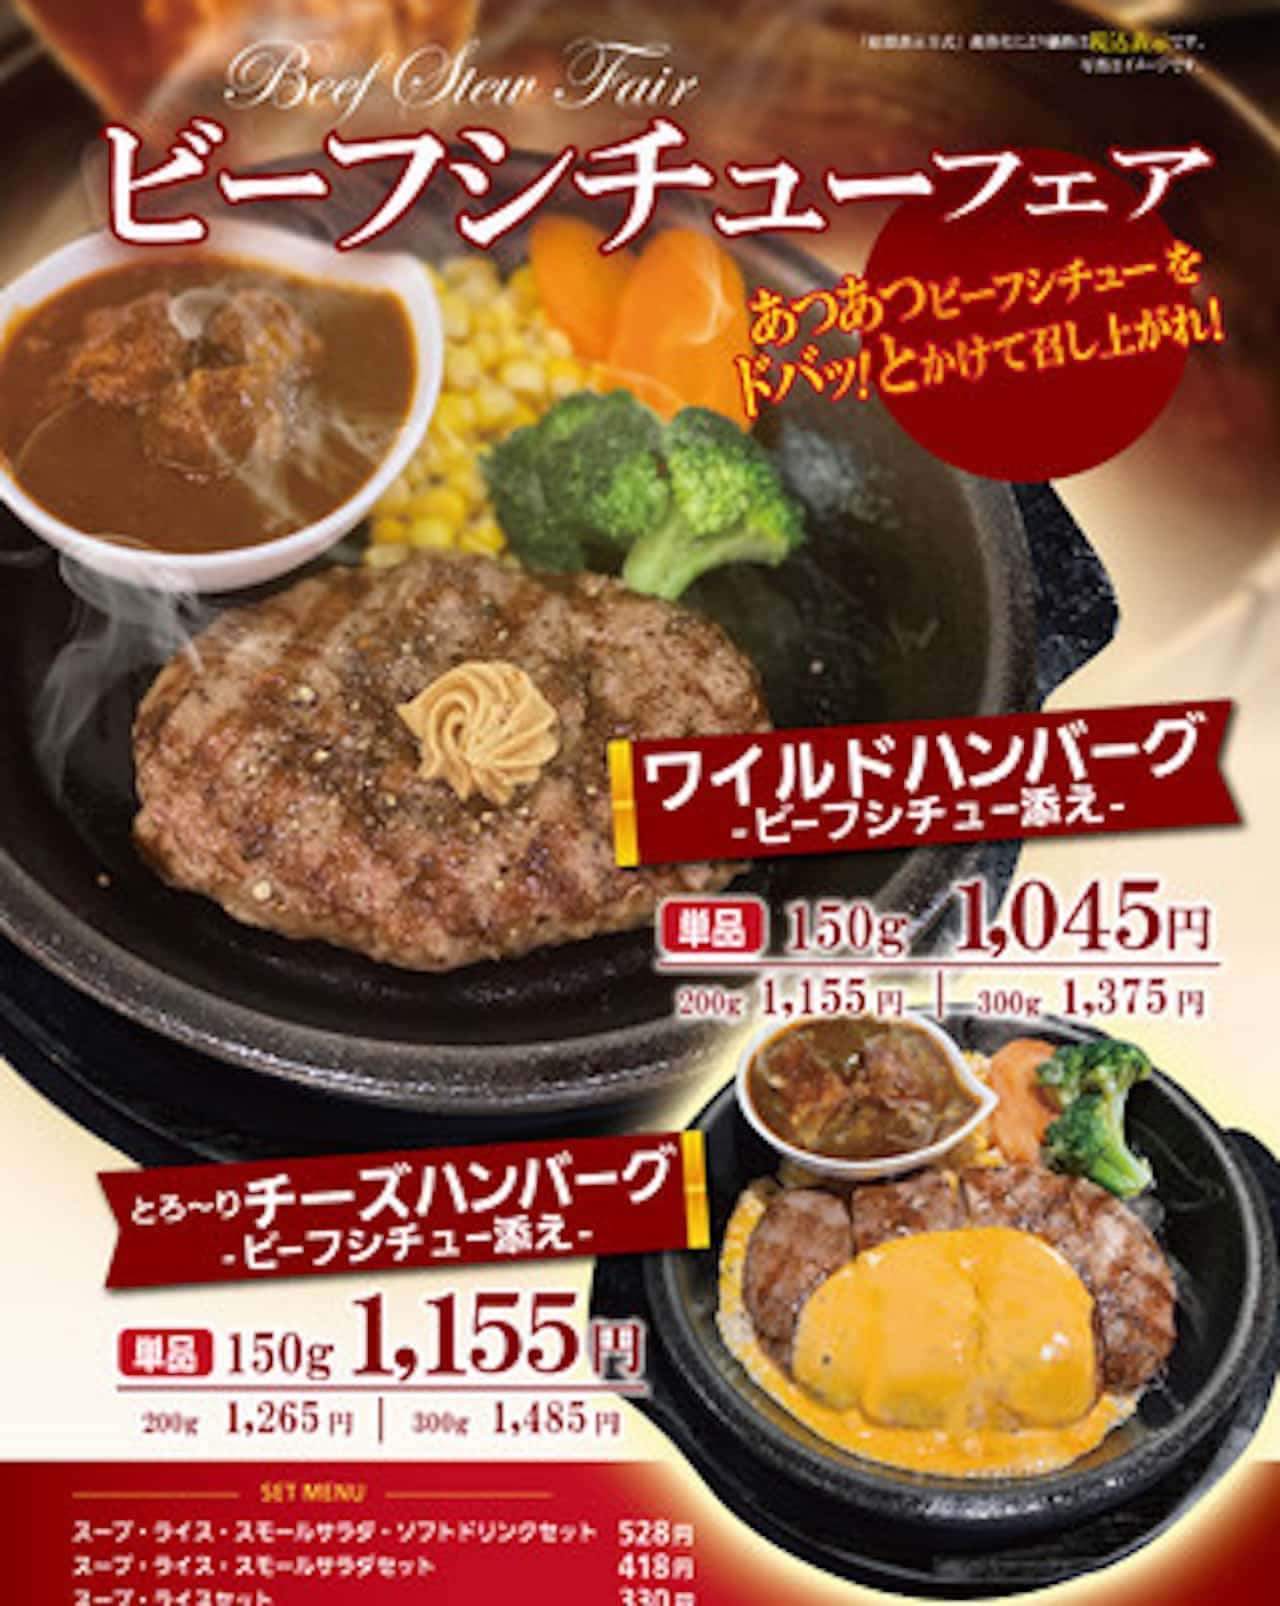 Ikinari!STEAK "Beef Steak Fair" for a limited time